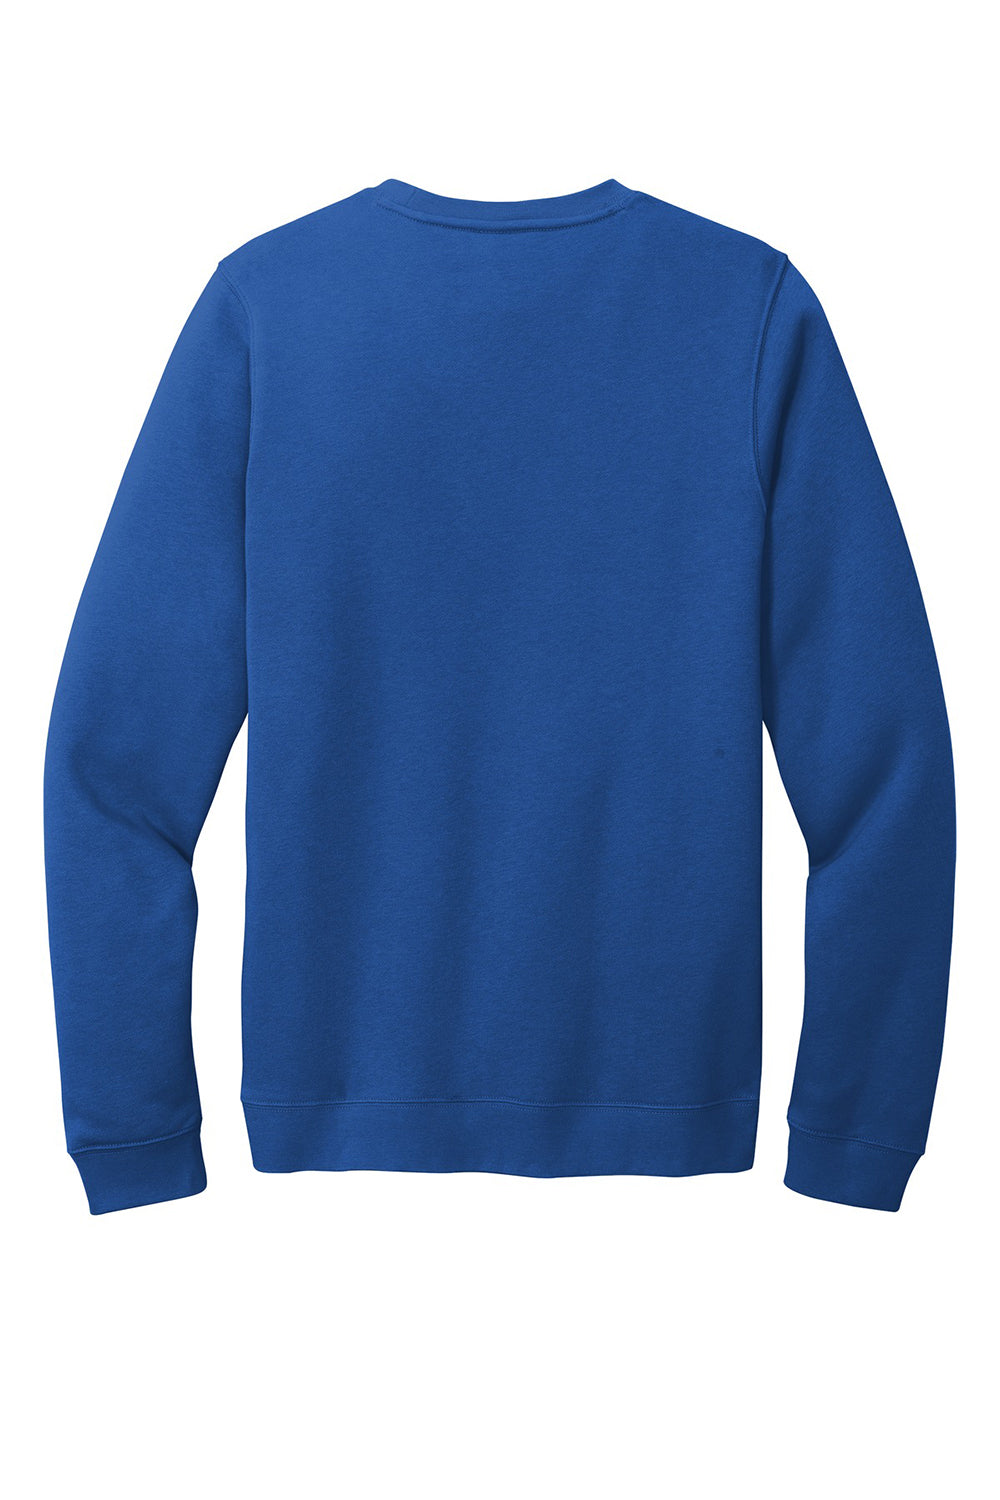 Nike CJ1614 Mens Club Fleece Crewneck Sweatshirt Royal Blue Flat Back